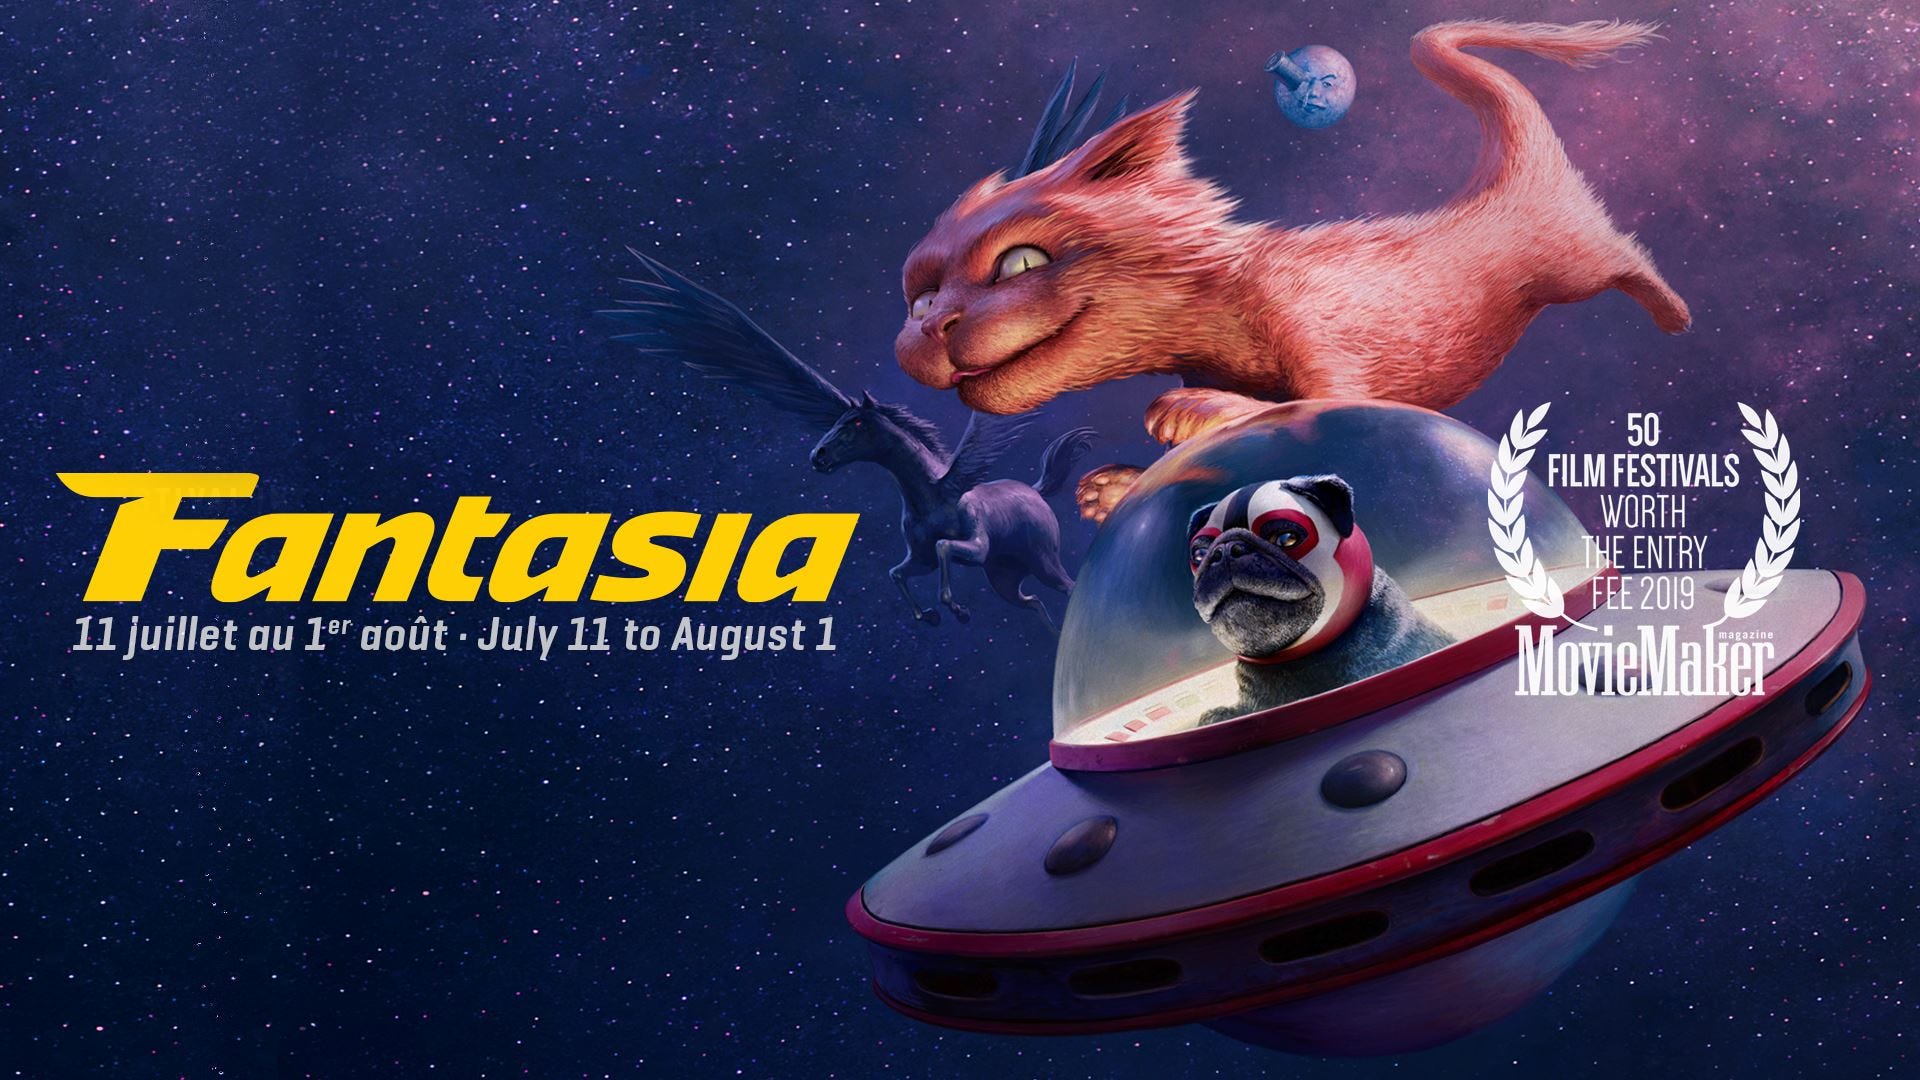 Fantasia 2019 Festival Lineup And Cinapse Crew Picks Images, Photos, Reviews